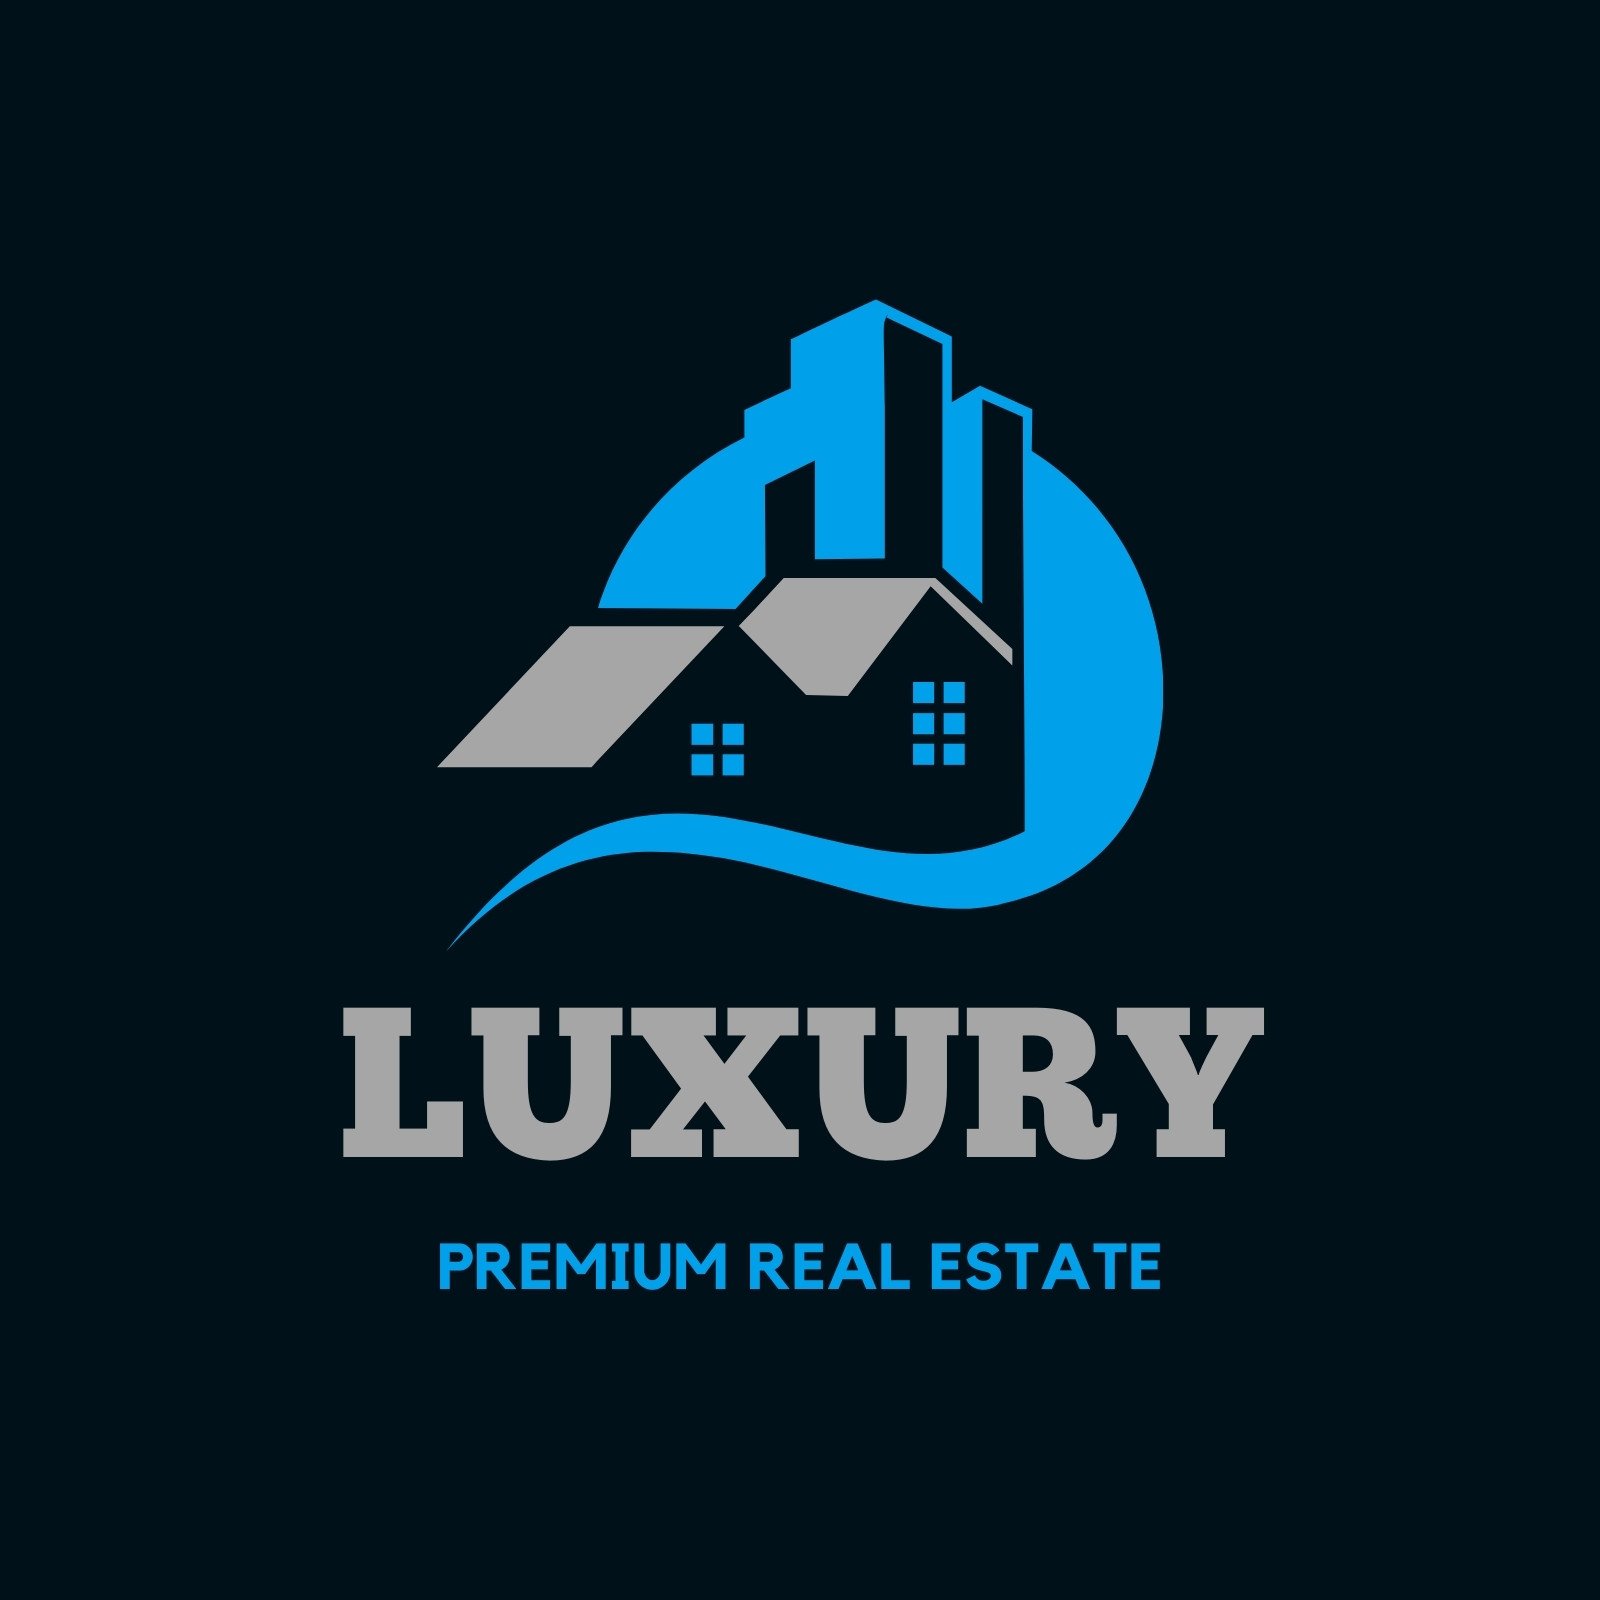 Upmarket, Modern, Real Estate Logo Design for Logo text should feature 